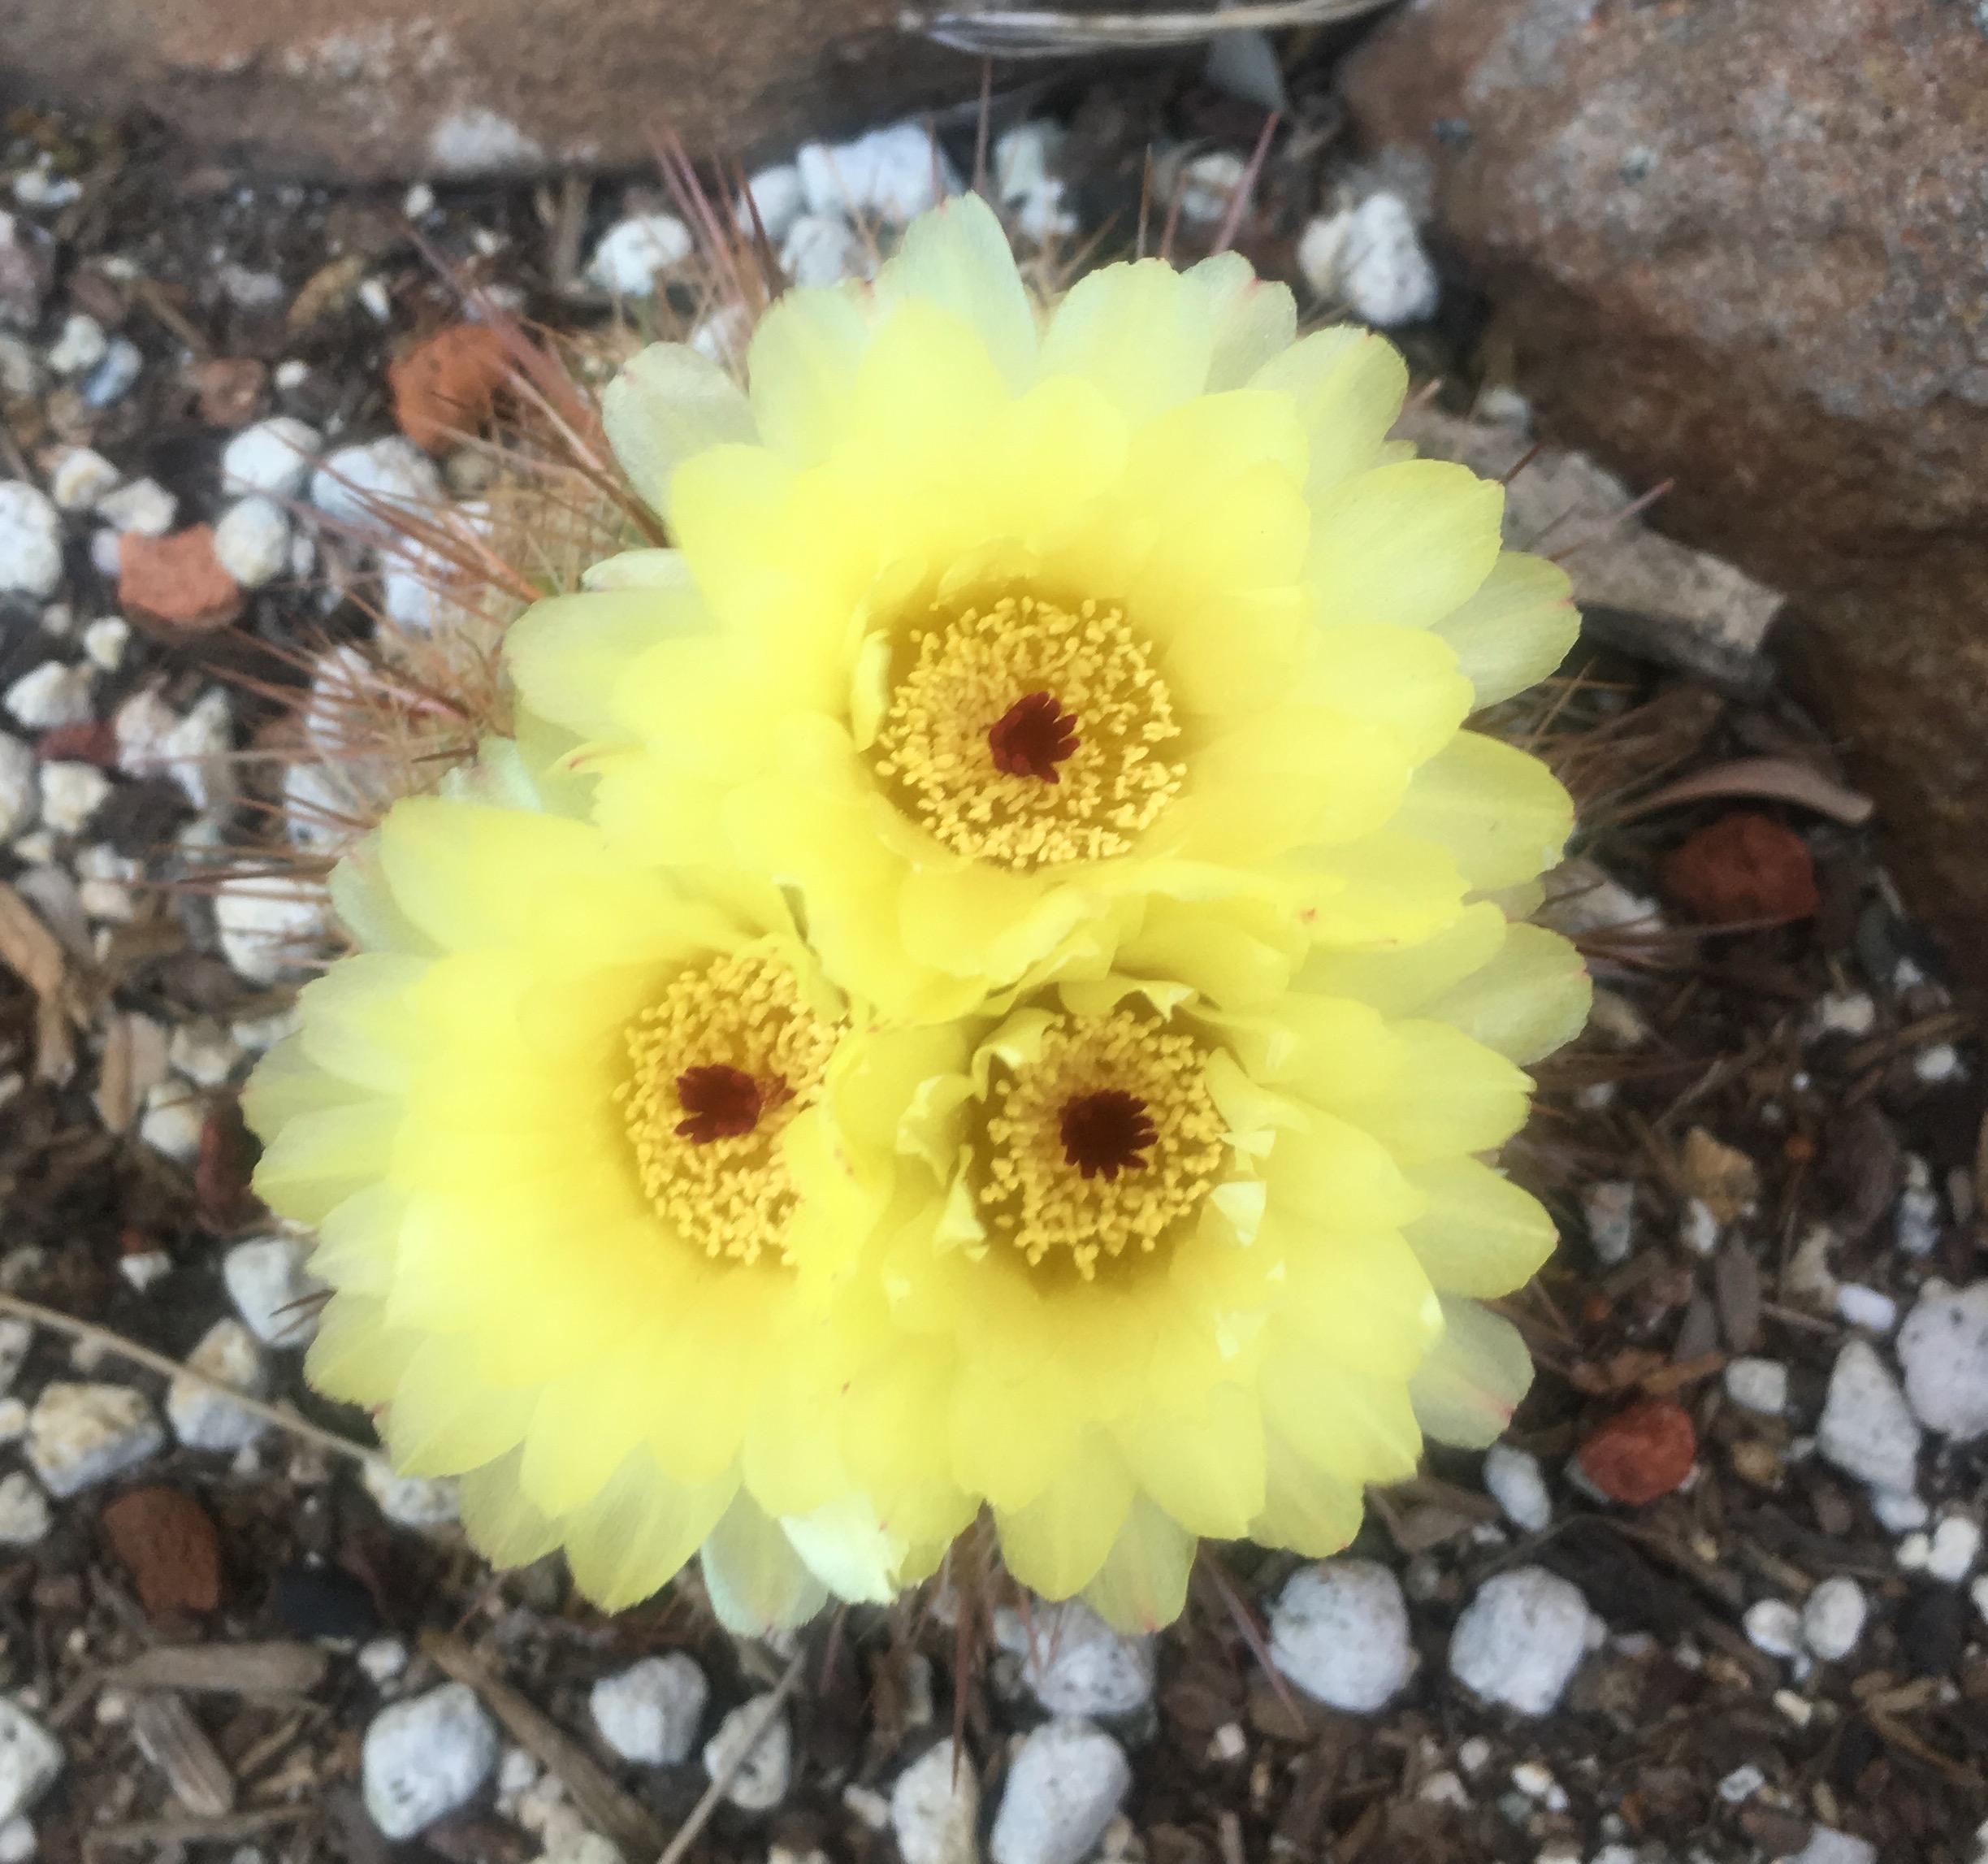 Some yellow cactus flowers